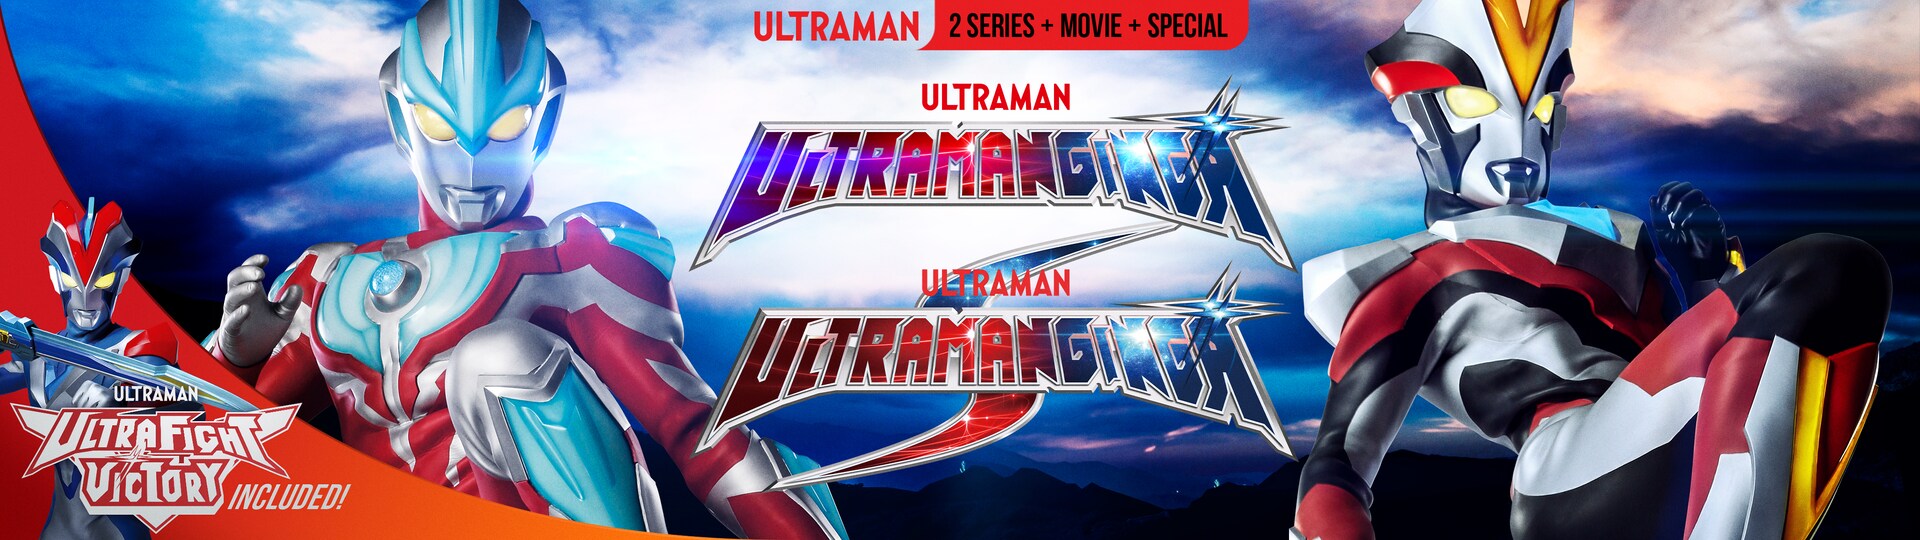 watch ultraman ginga s the movie